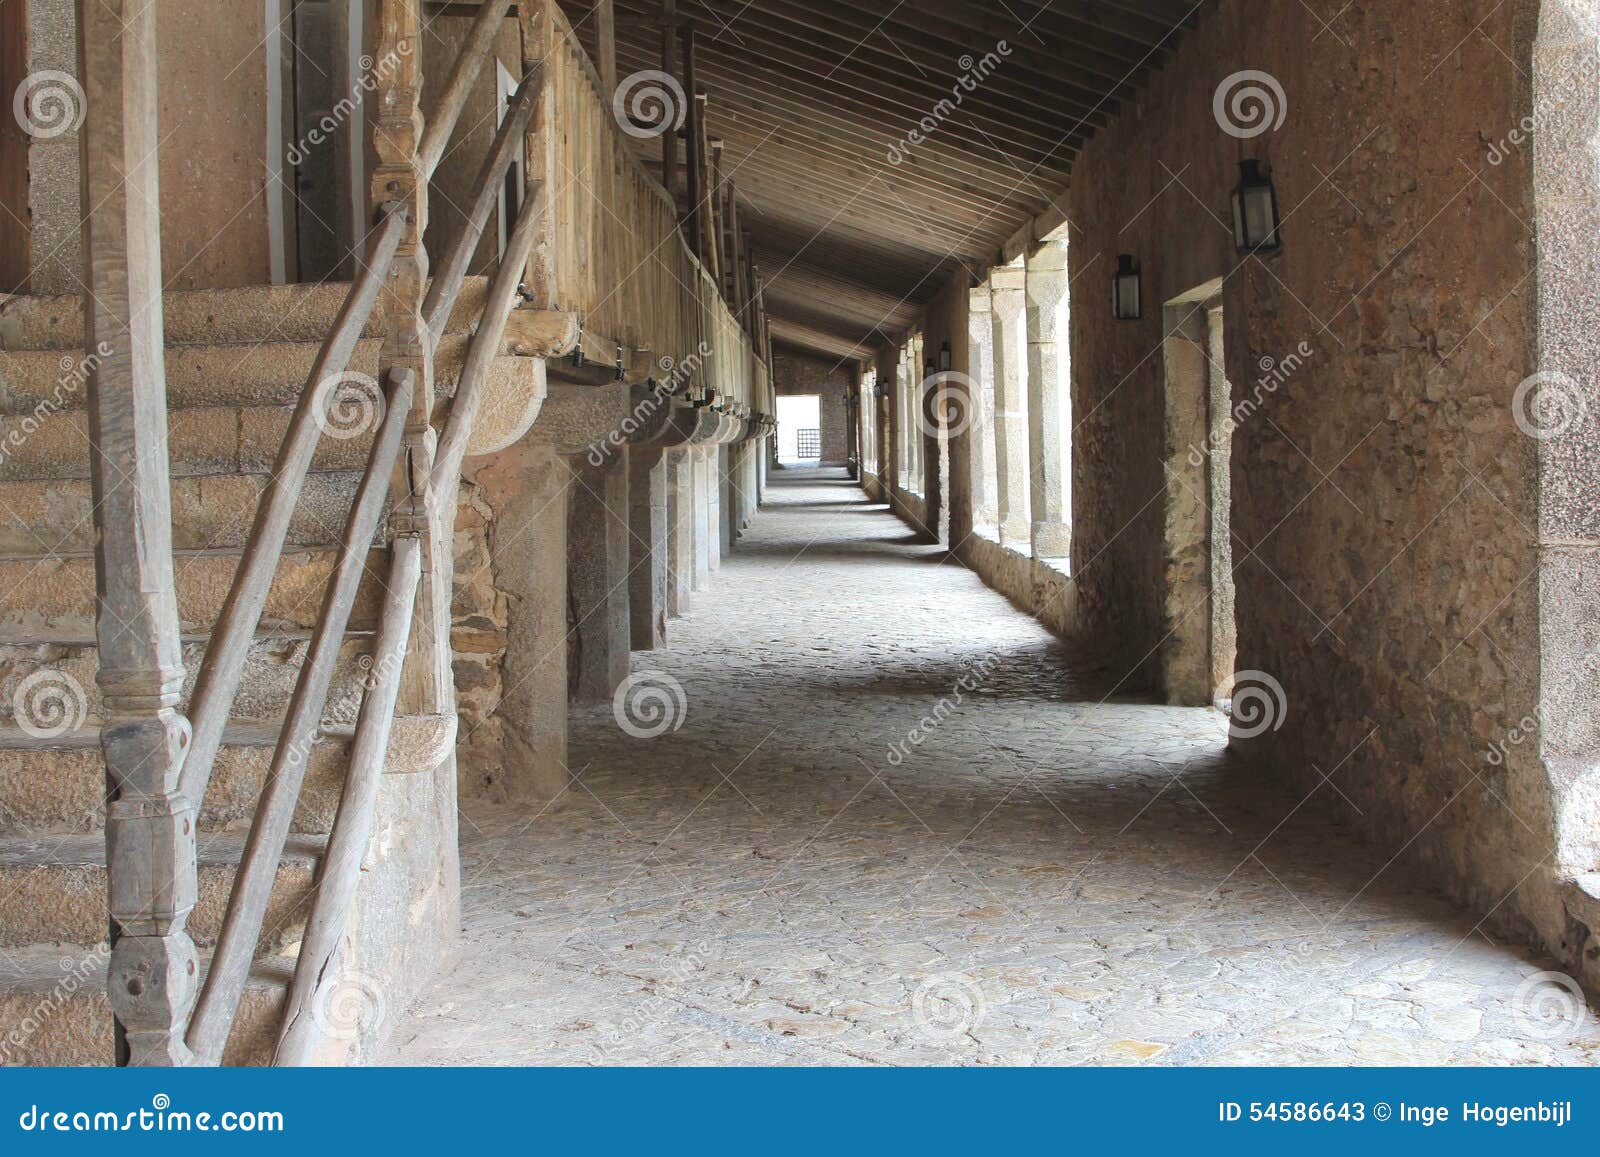 cells of the monks in monastery el santuari de lluc, mallorca, spain